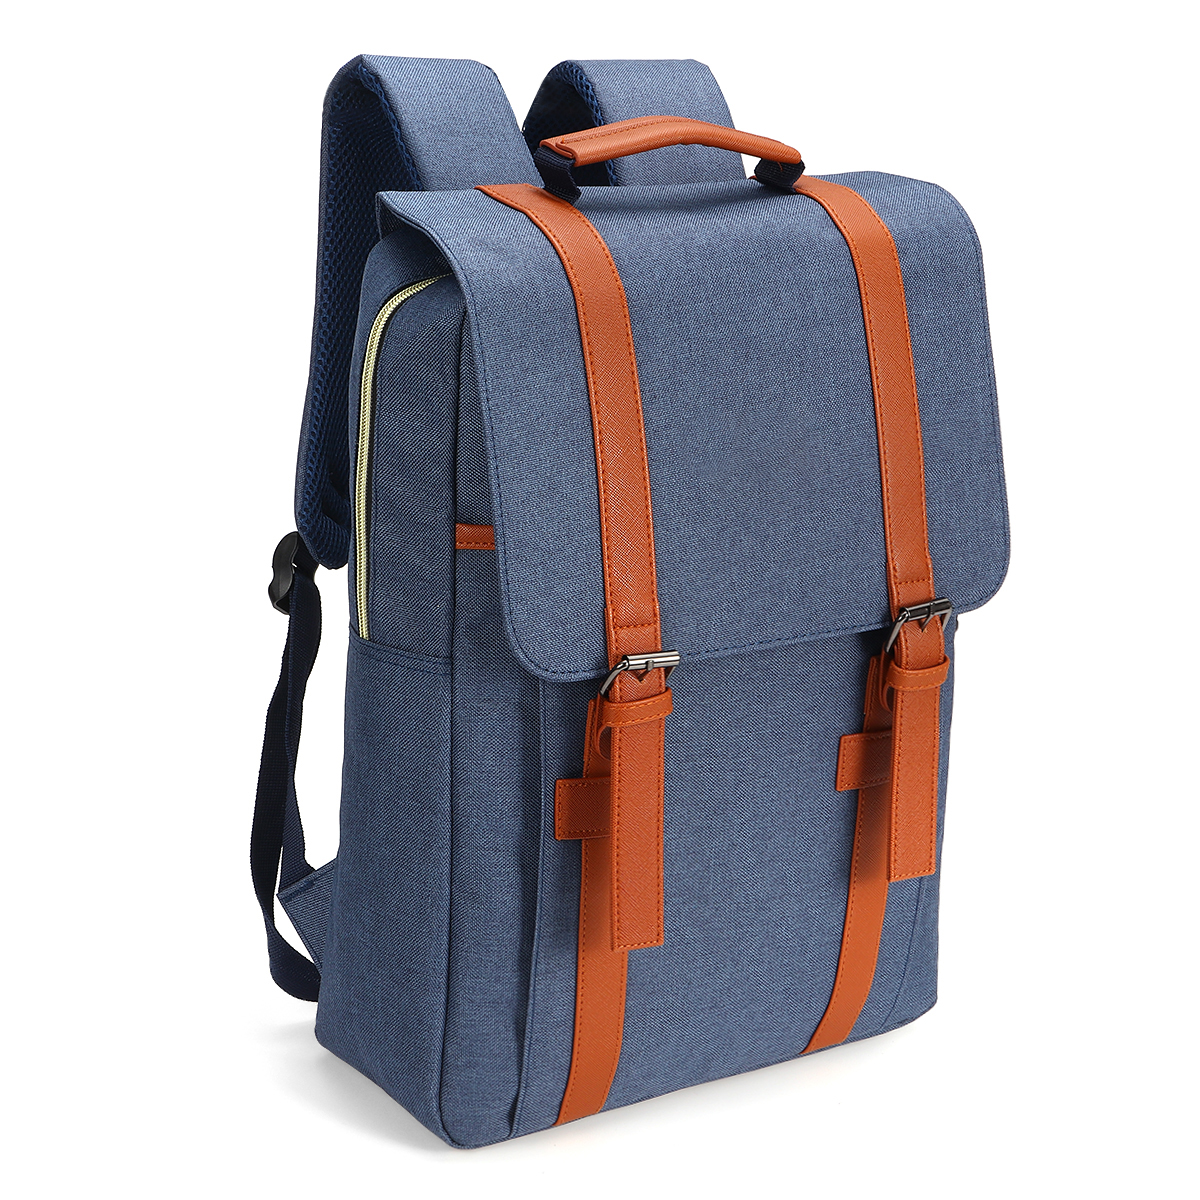 Outdoor-Travel-Backpack-Waterproof-Nylon-School-Bag-Large-Laptop-Bag-Unisex-Business-Bag-1615929-3